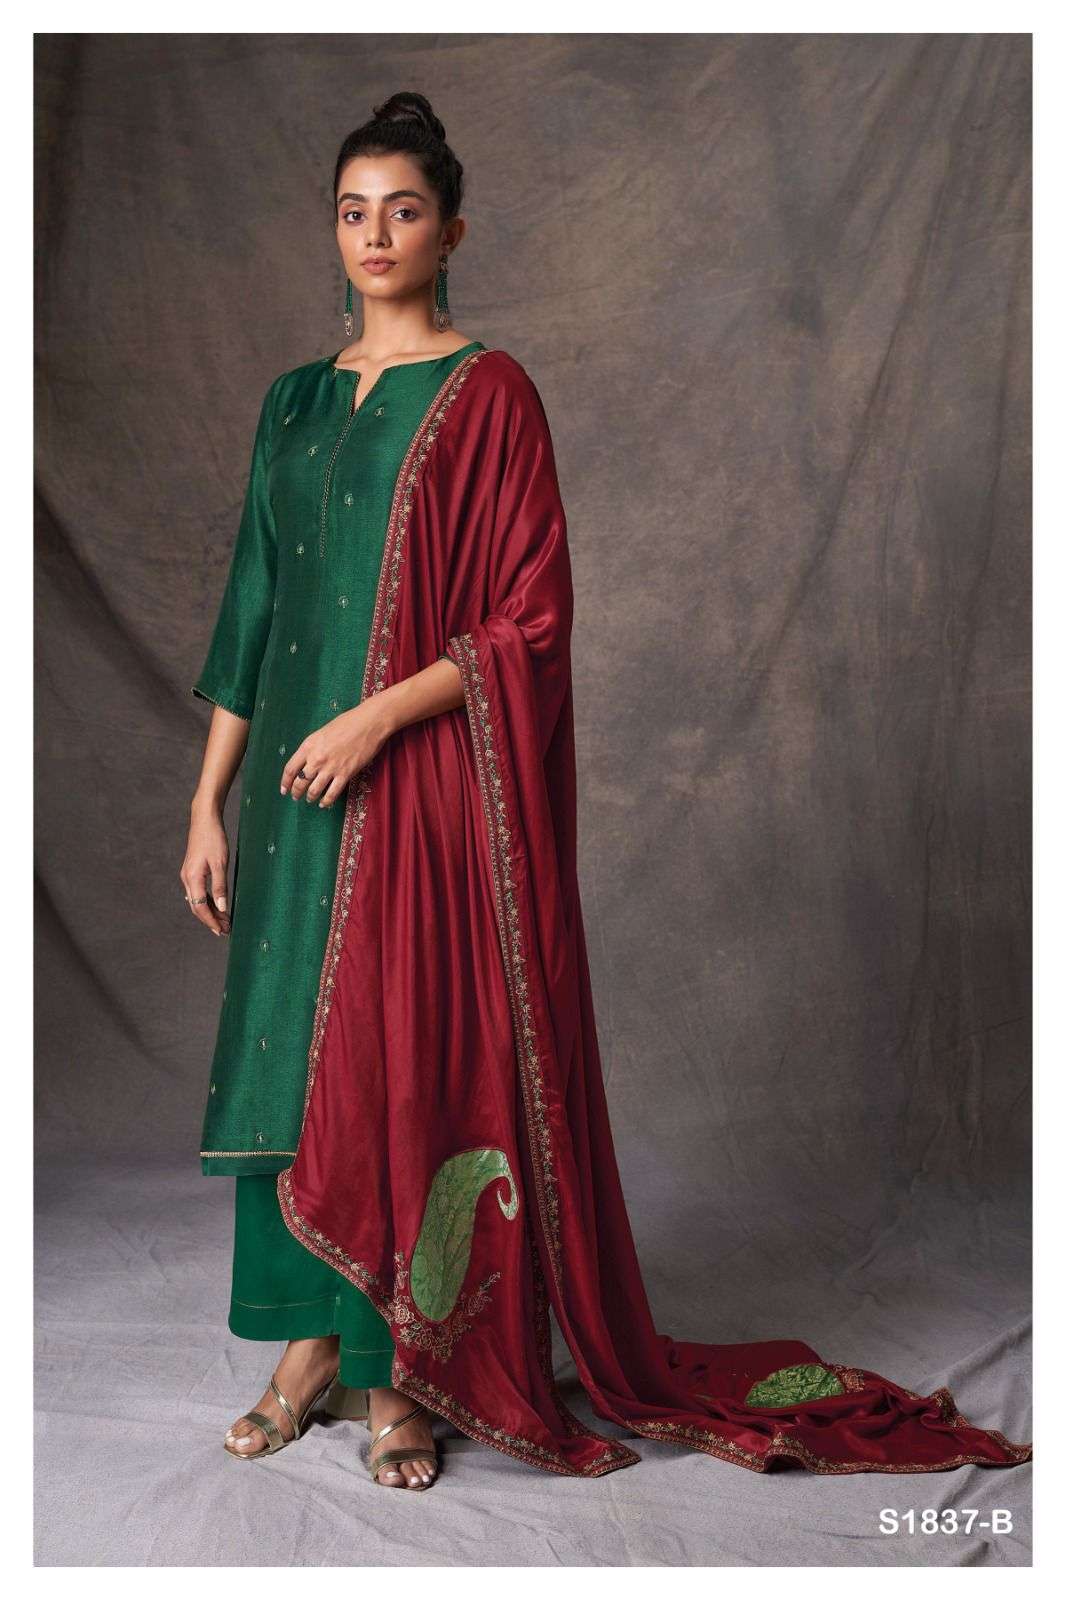 ganga aspen 1837 colour series latest designer salwar kameez wholesaler surat gujarat